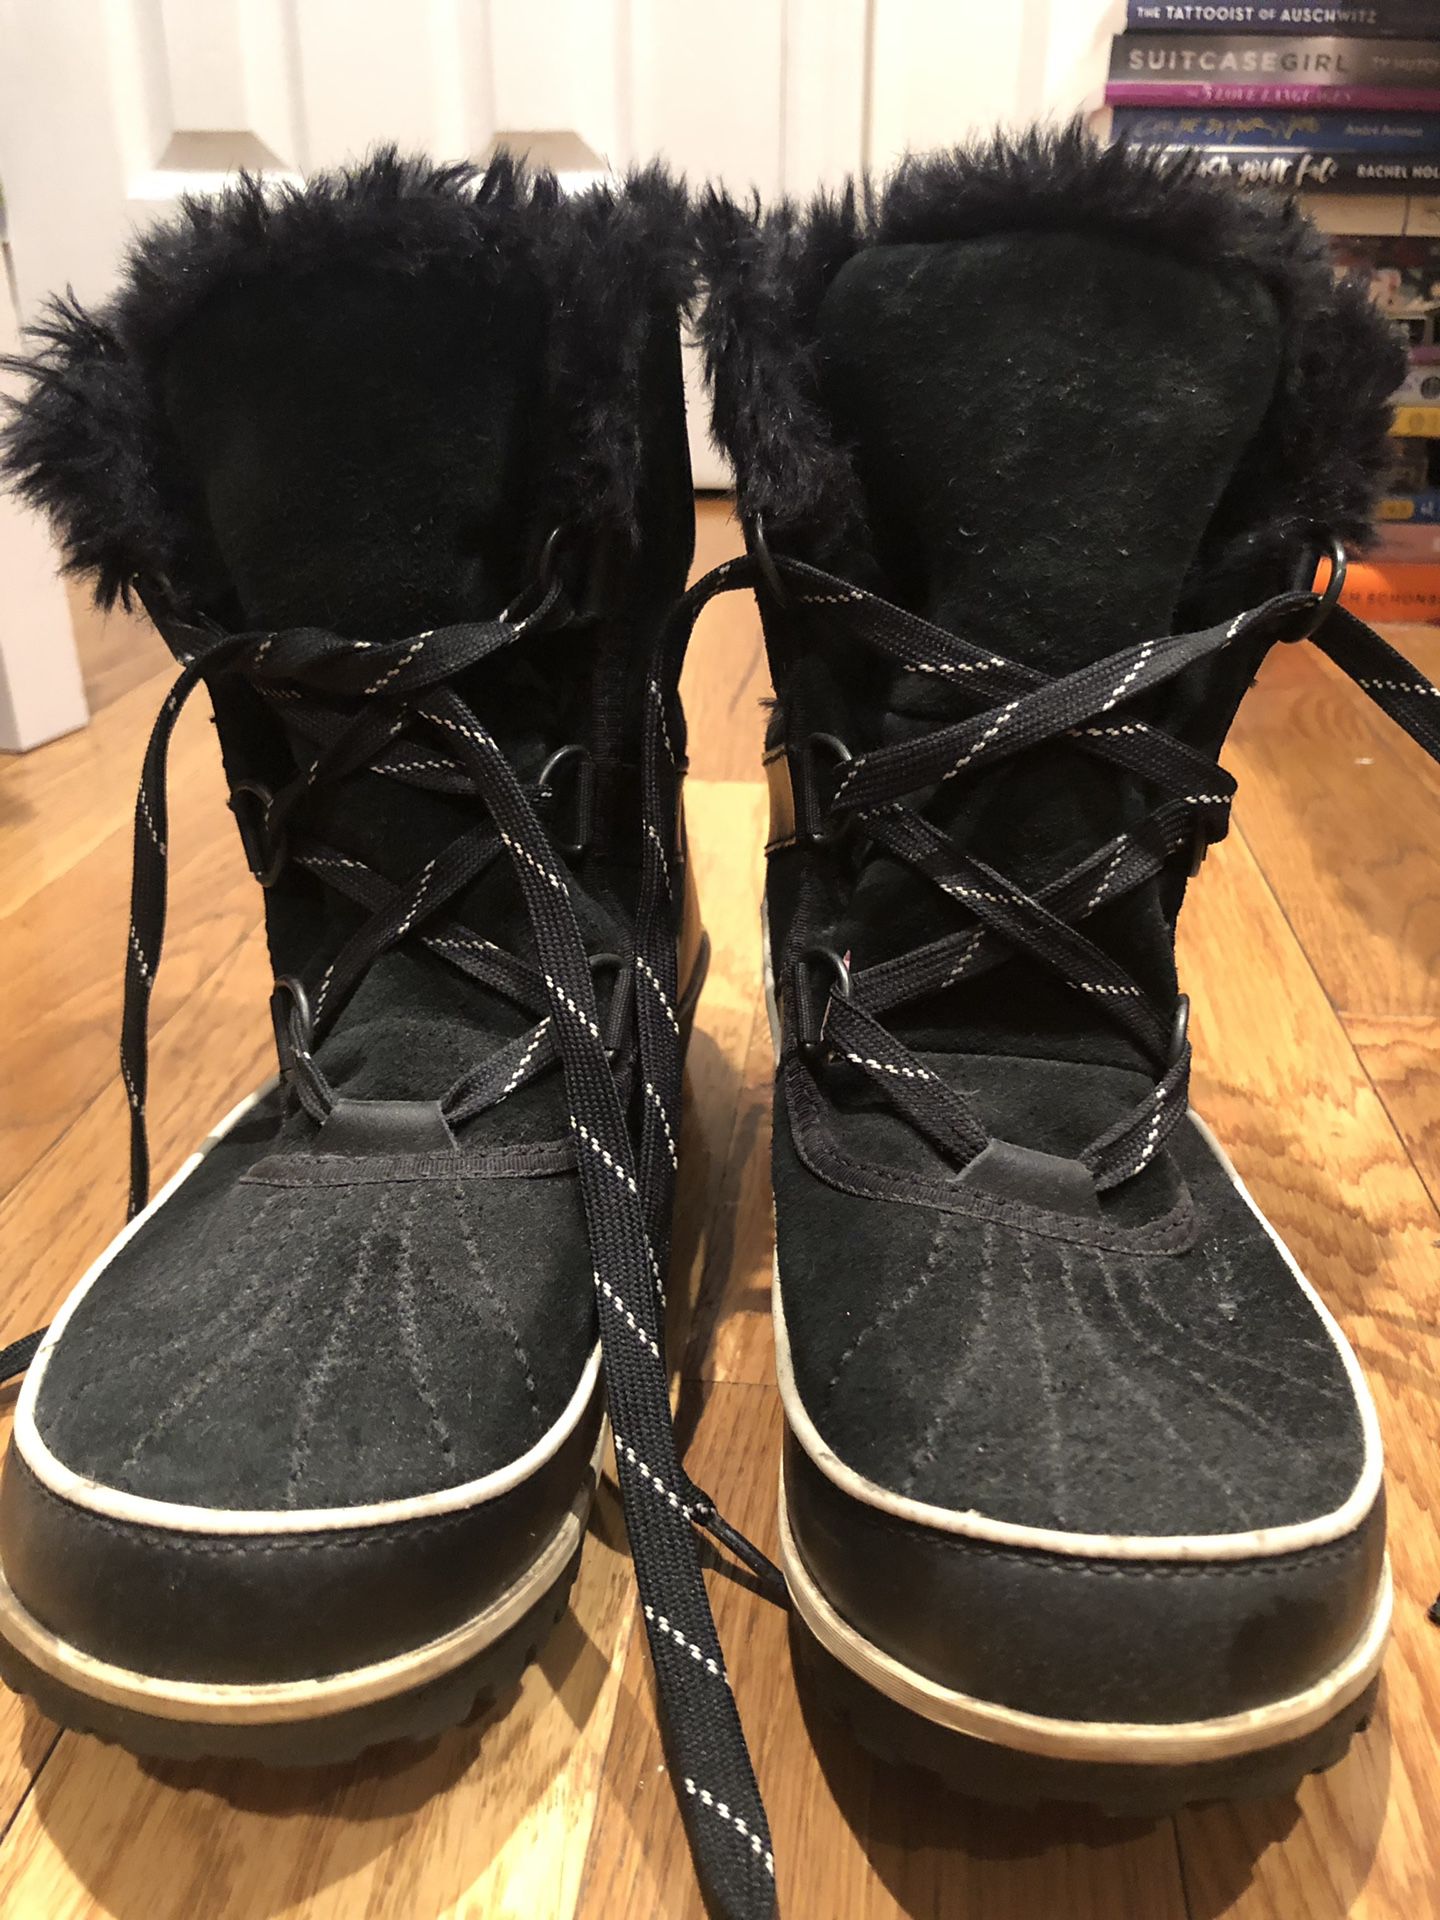 Sorel boots size 9